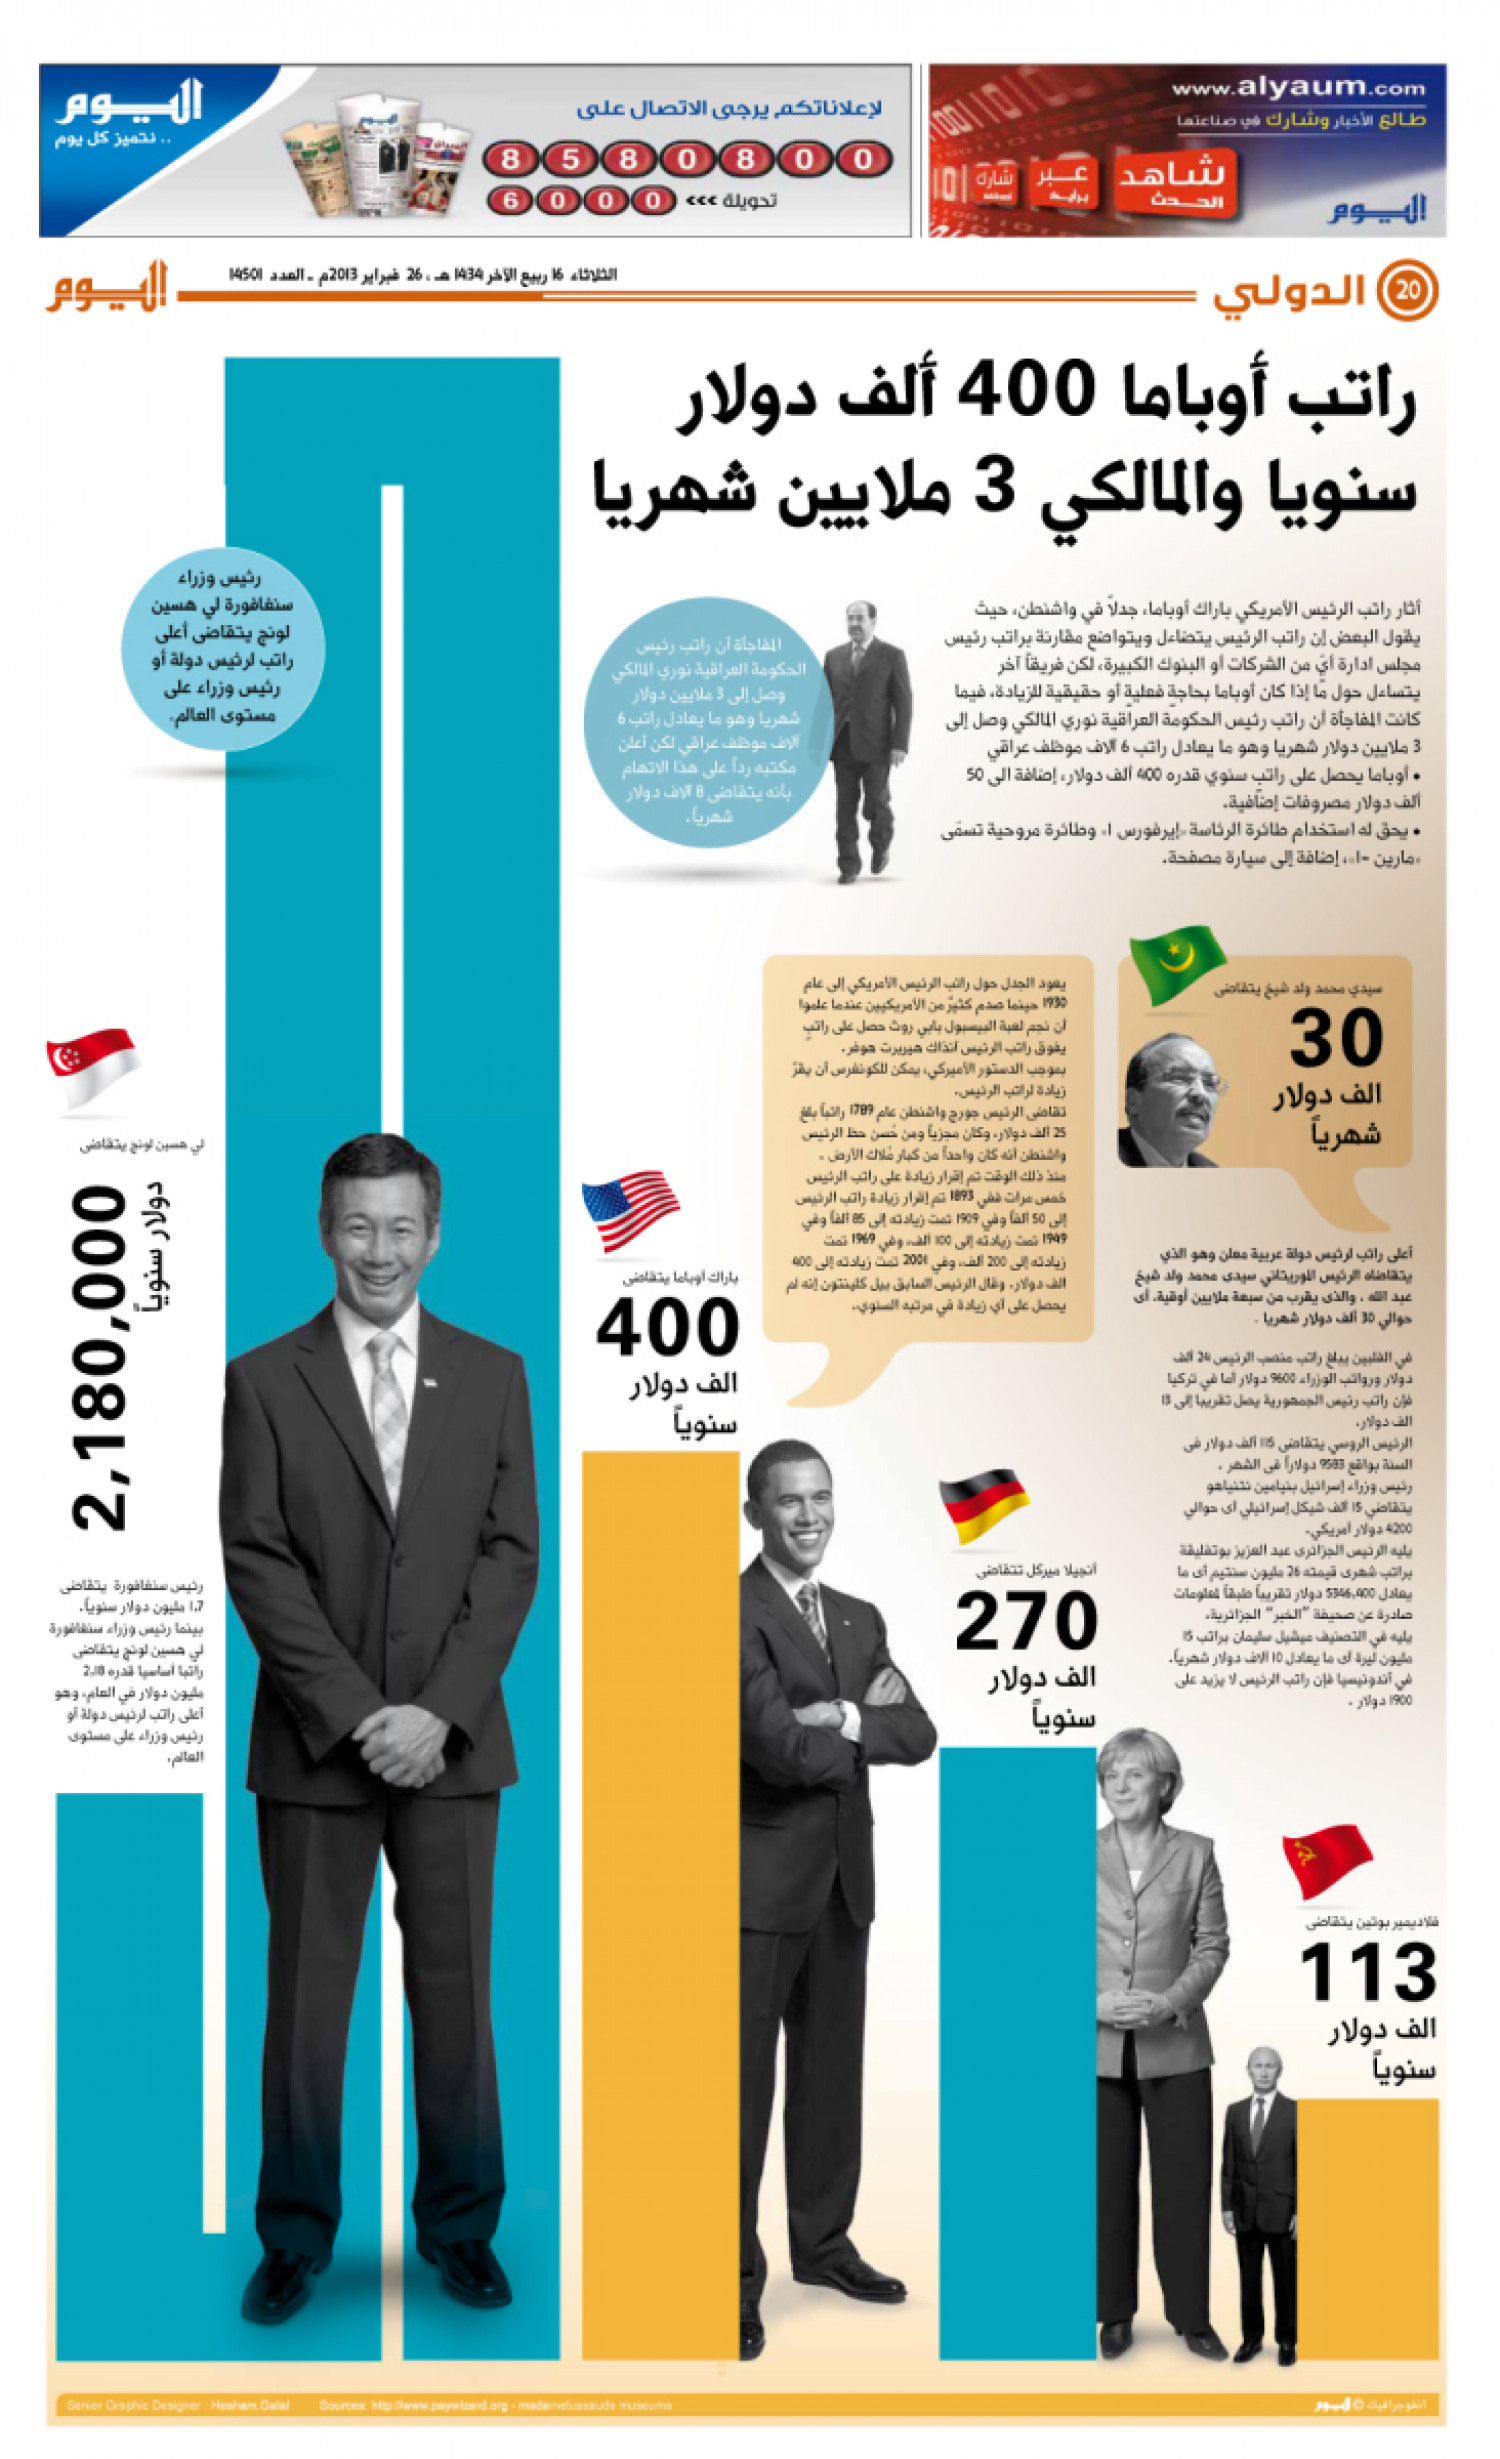 Obama's annual salary 400 000 $ & Nori Almalki earns 3 million monthly Infographic